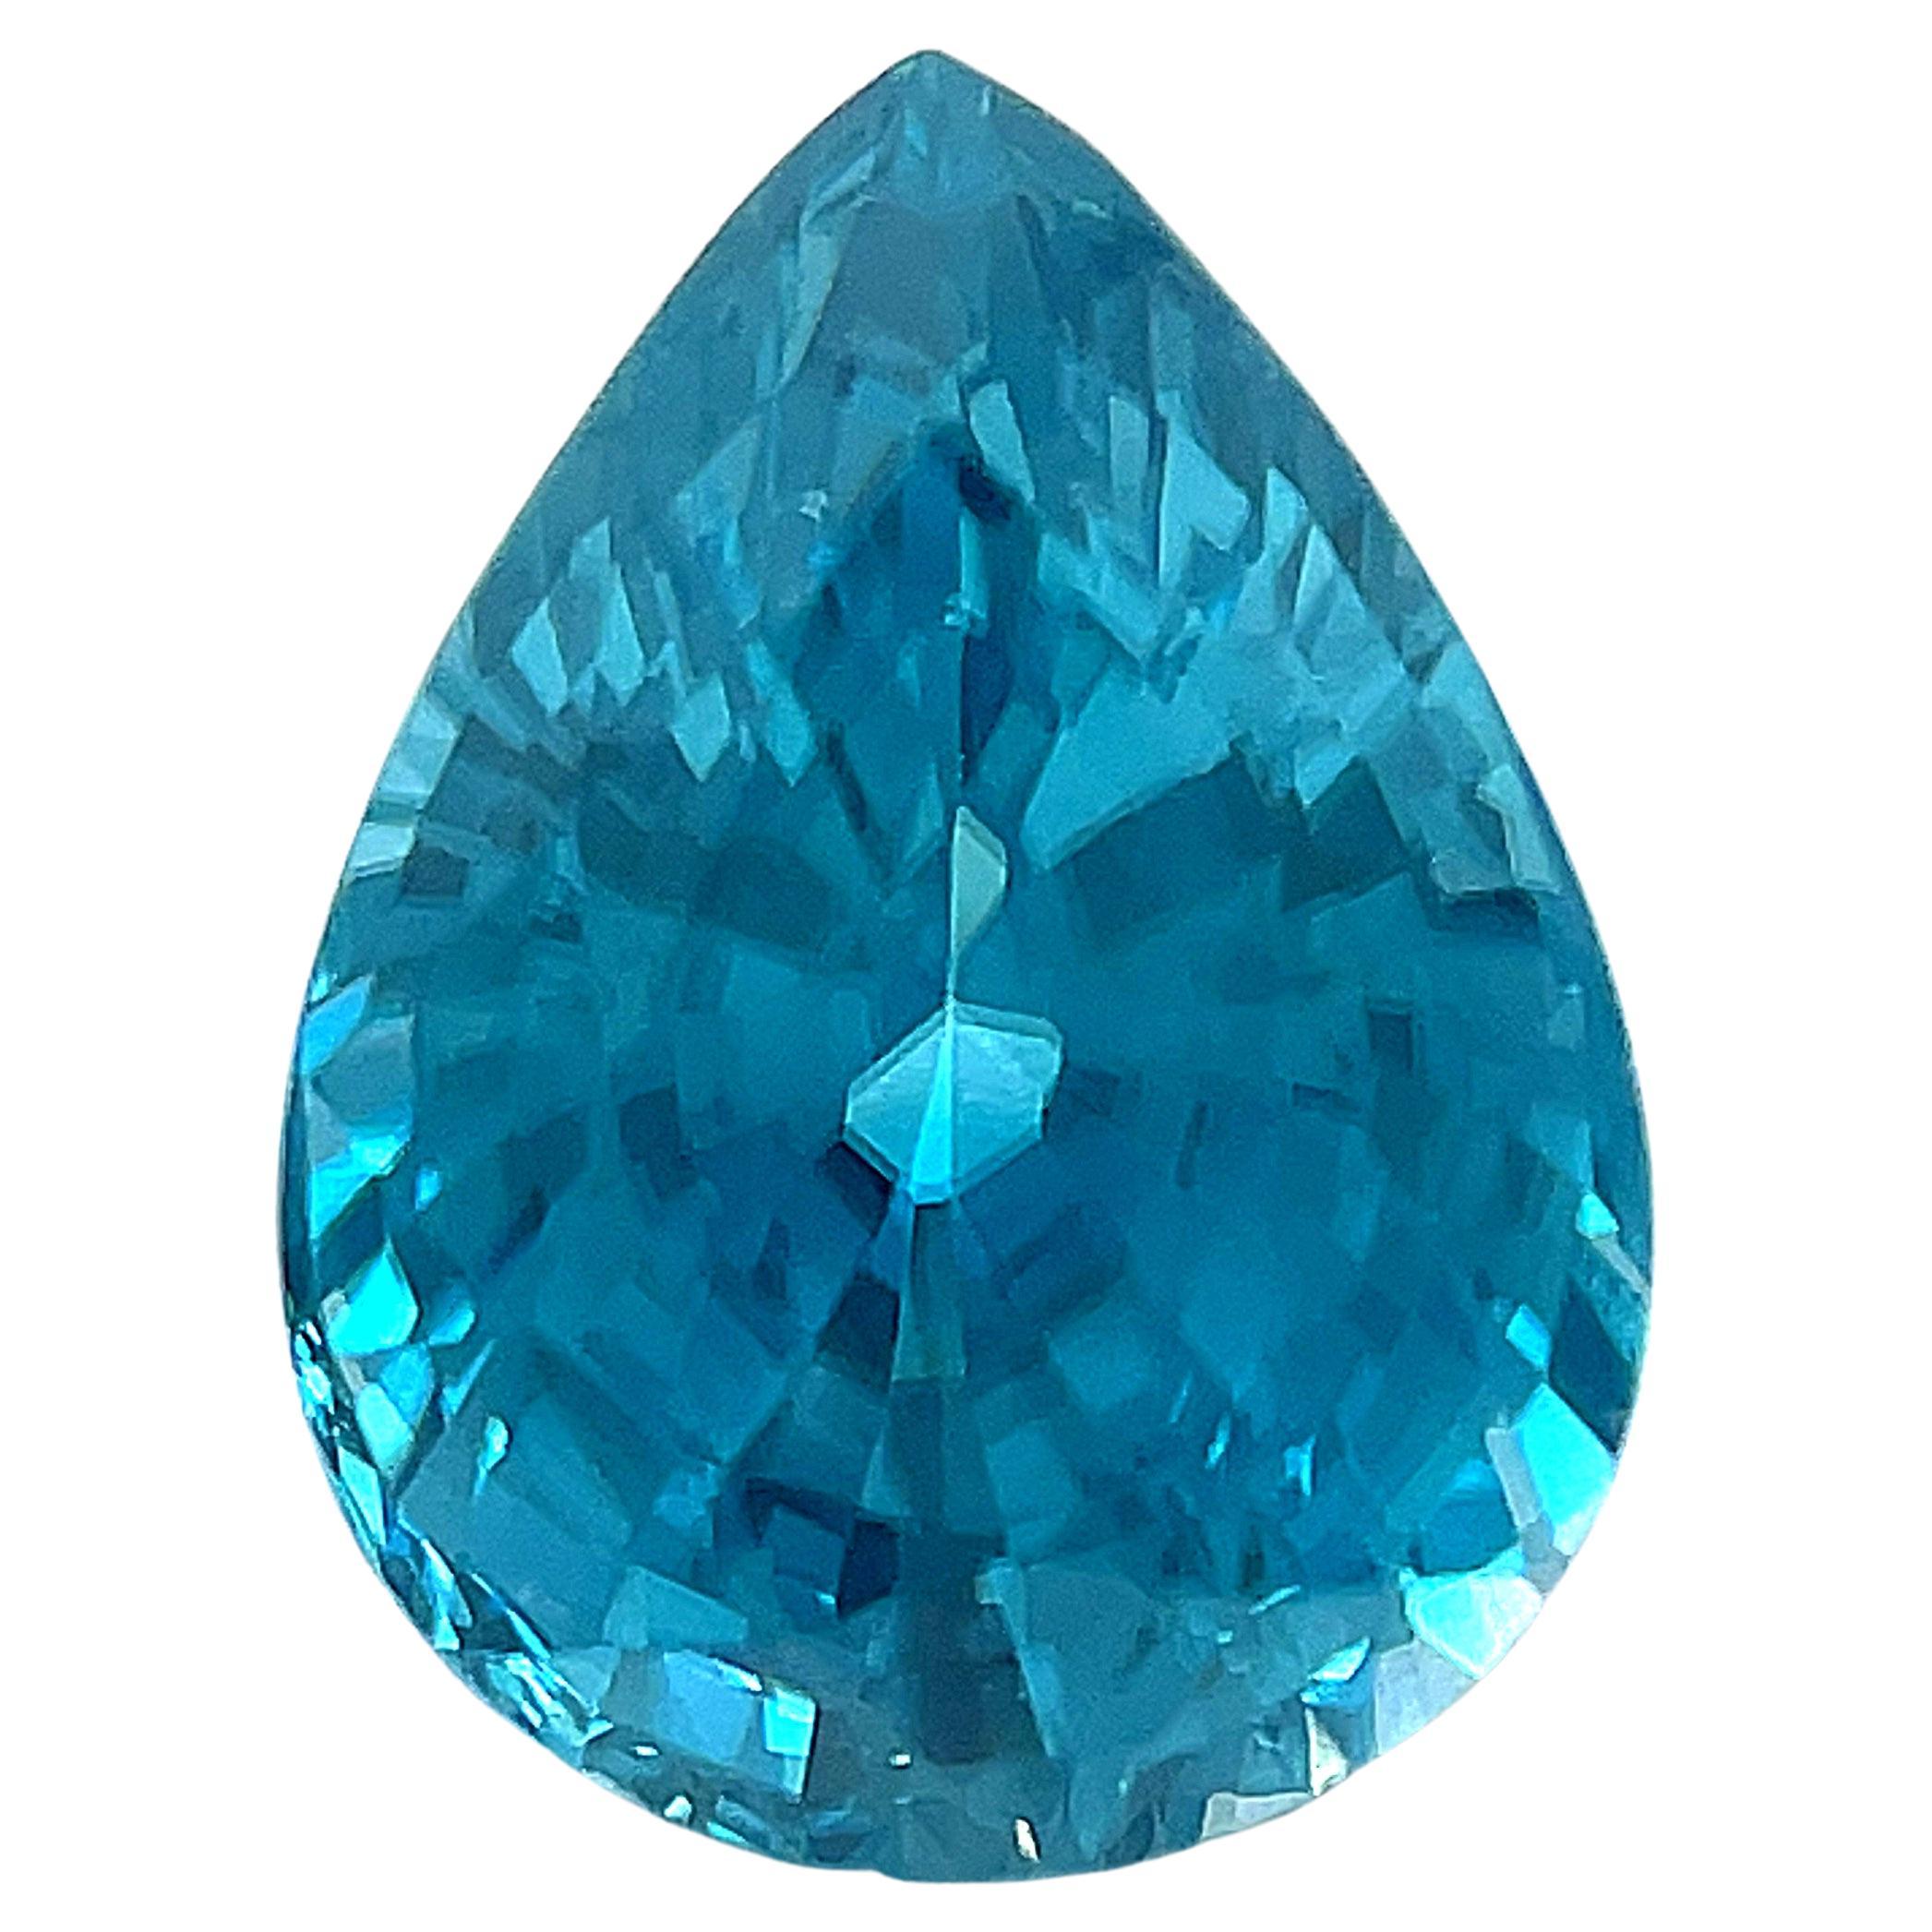 4.72 Carat Pear Shaped Blue Zircon, Unset Loose Gemstone 